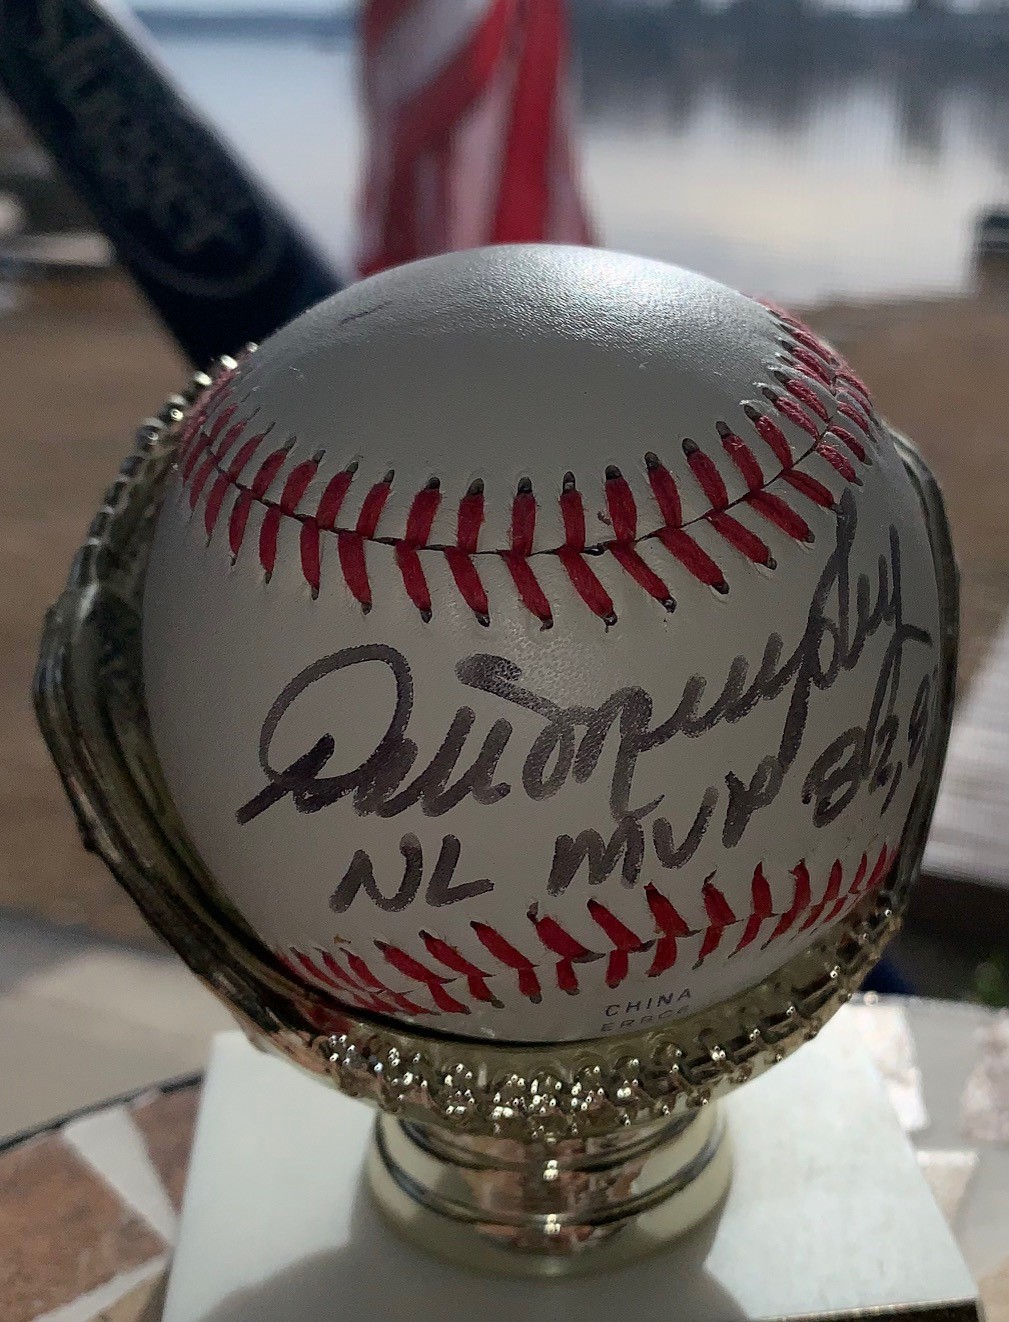 Dale Murphy Signed Baseball, wfw2023